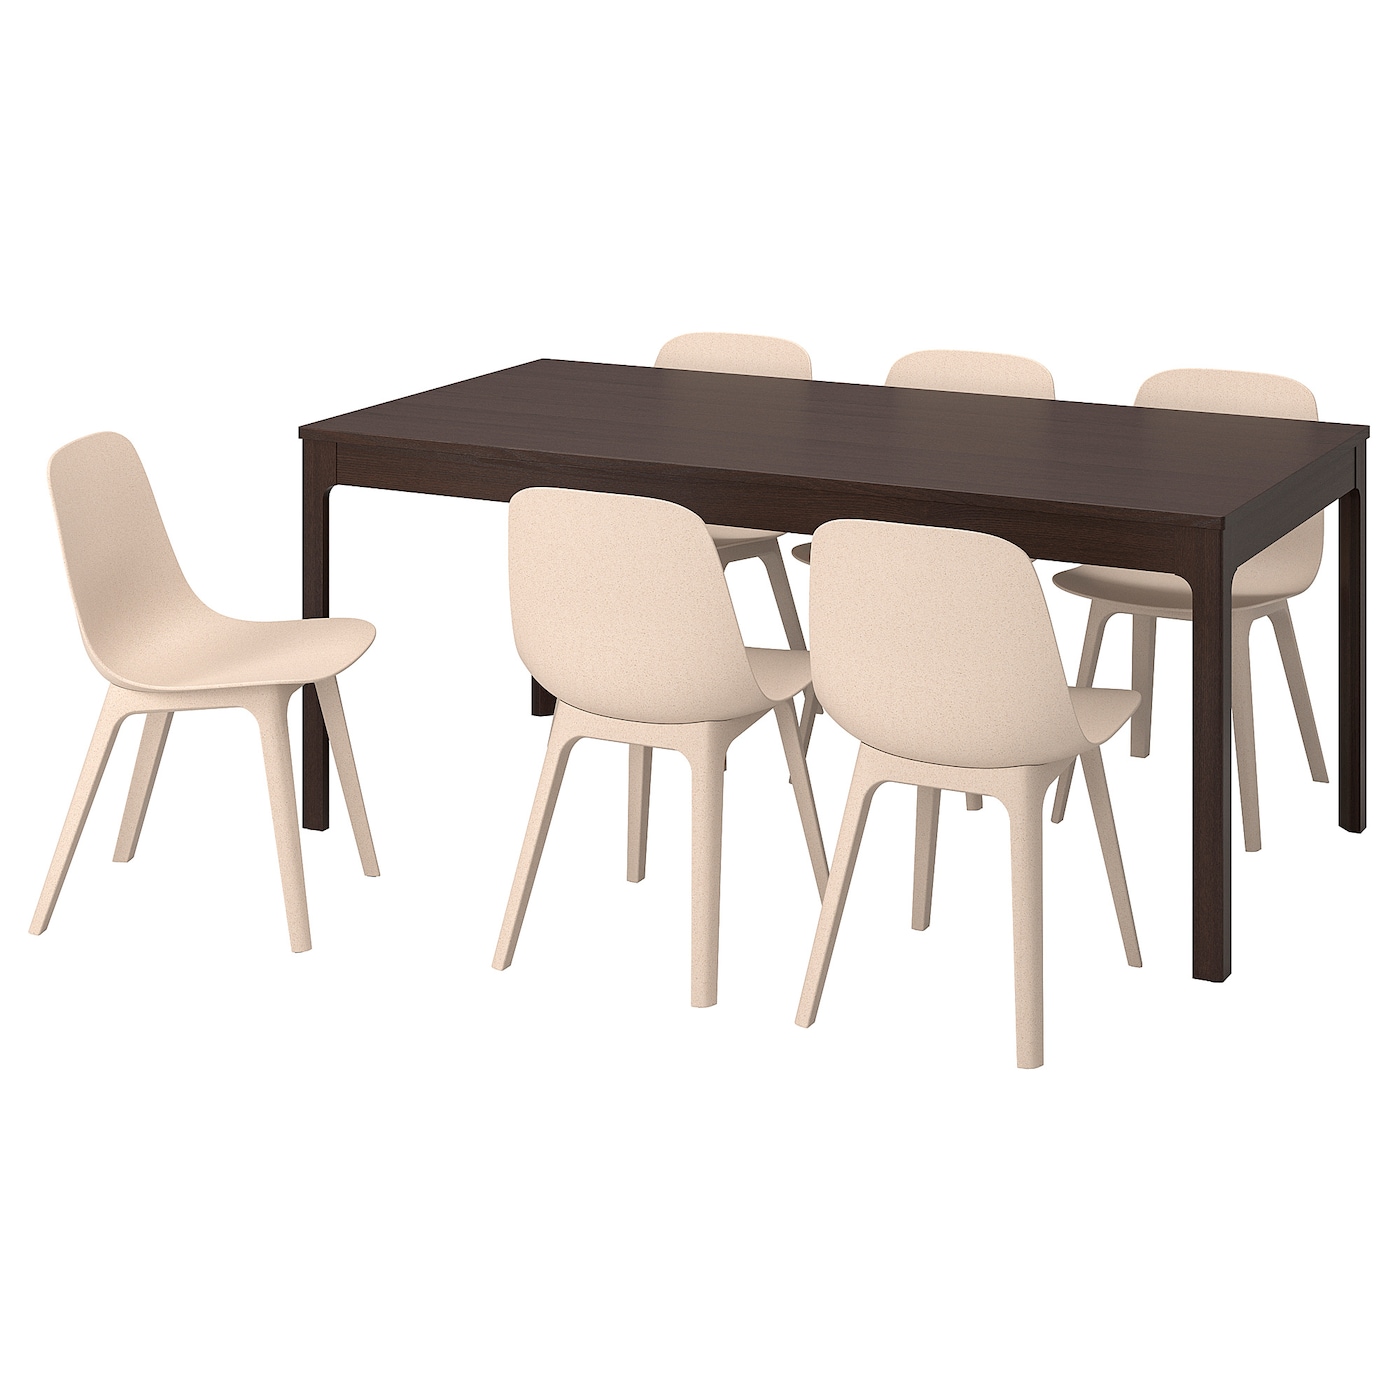 Стол и 6 стульев - IKEA EKEDALEN/ODGER/ ЭКЕДАЛЕН/ОДГЕР ИКЕА, 180х240х90 см, темно-коричневый/бежевый